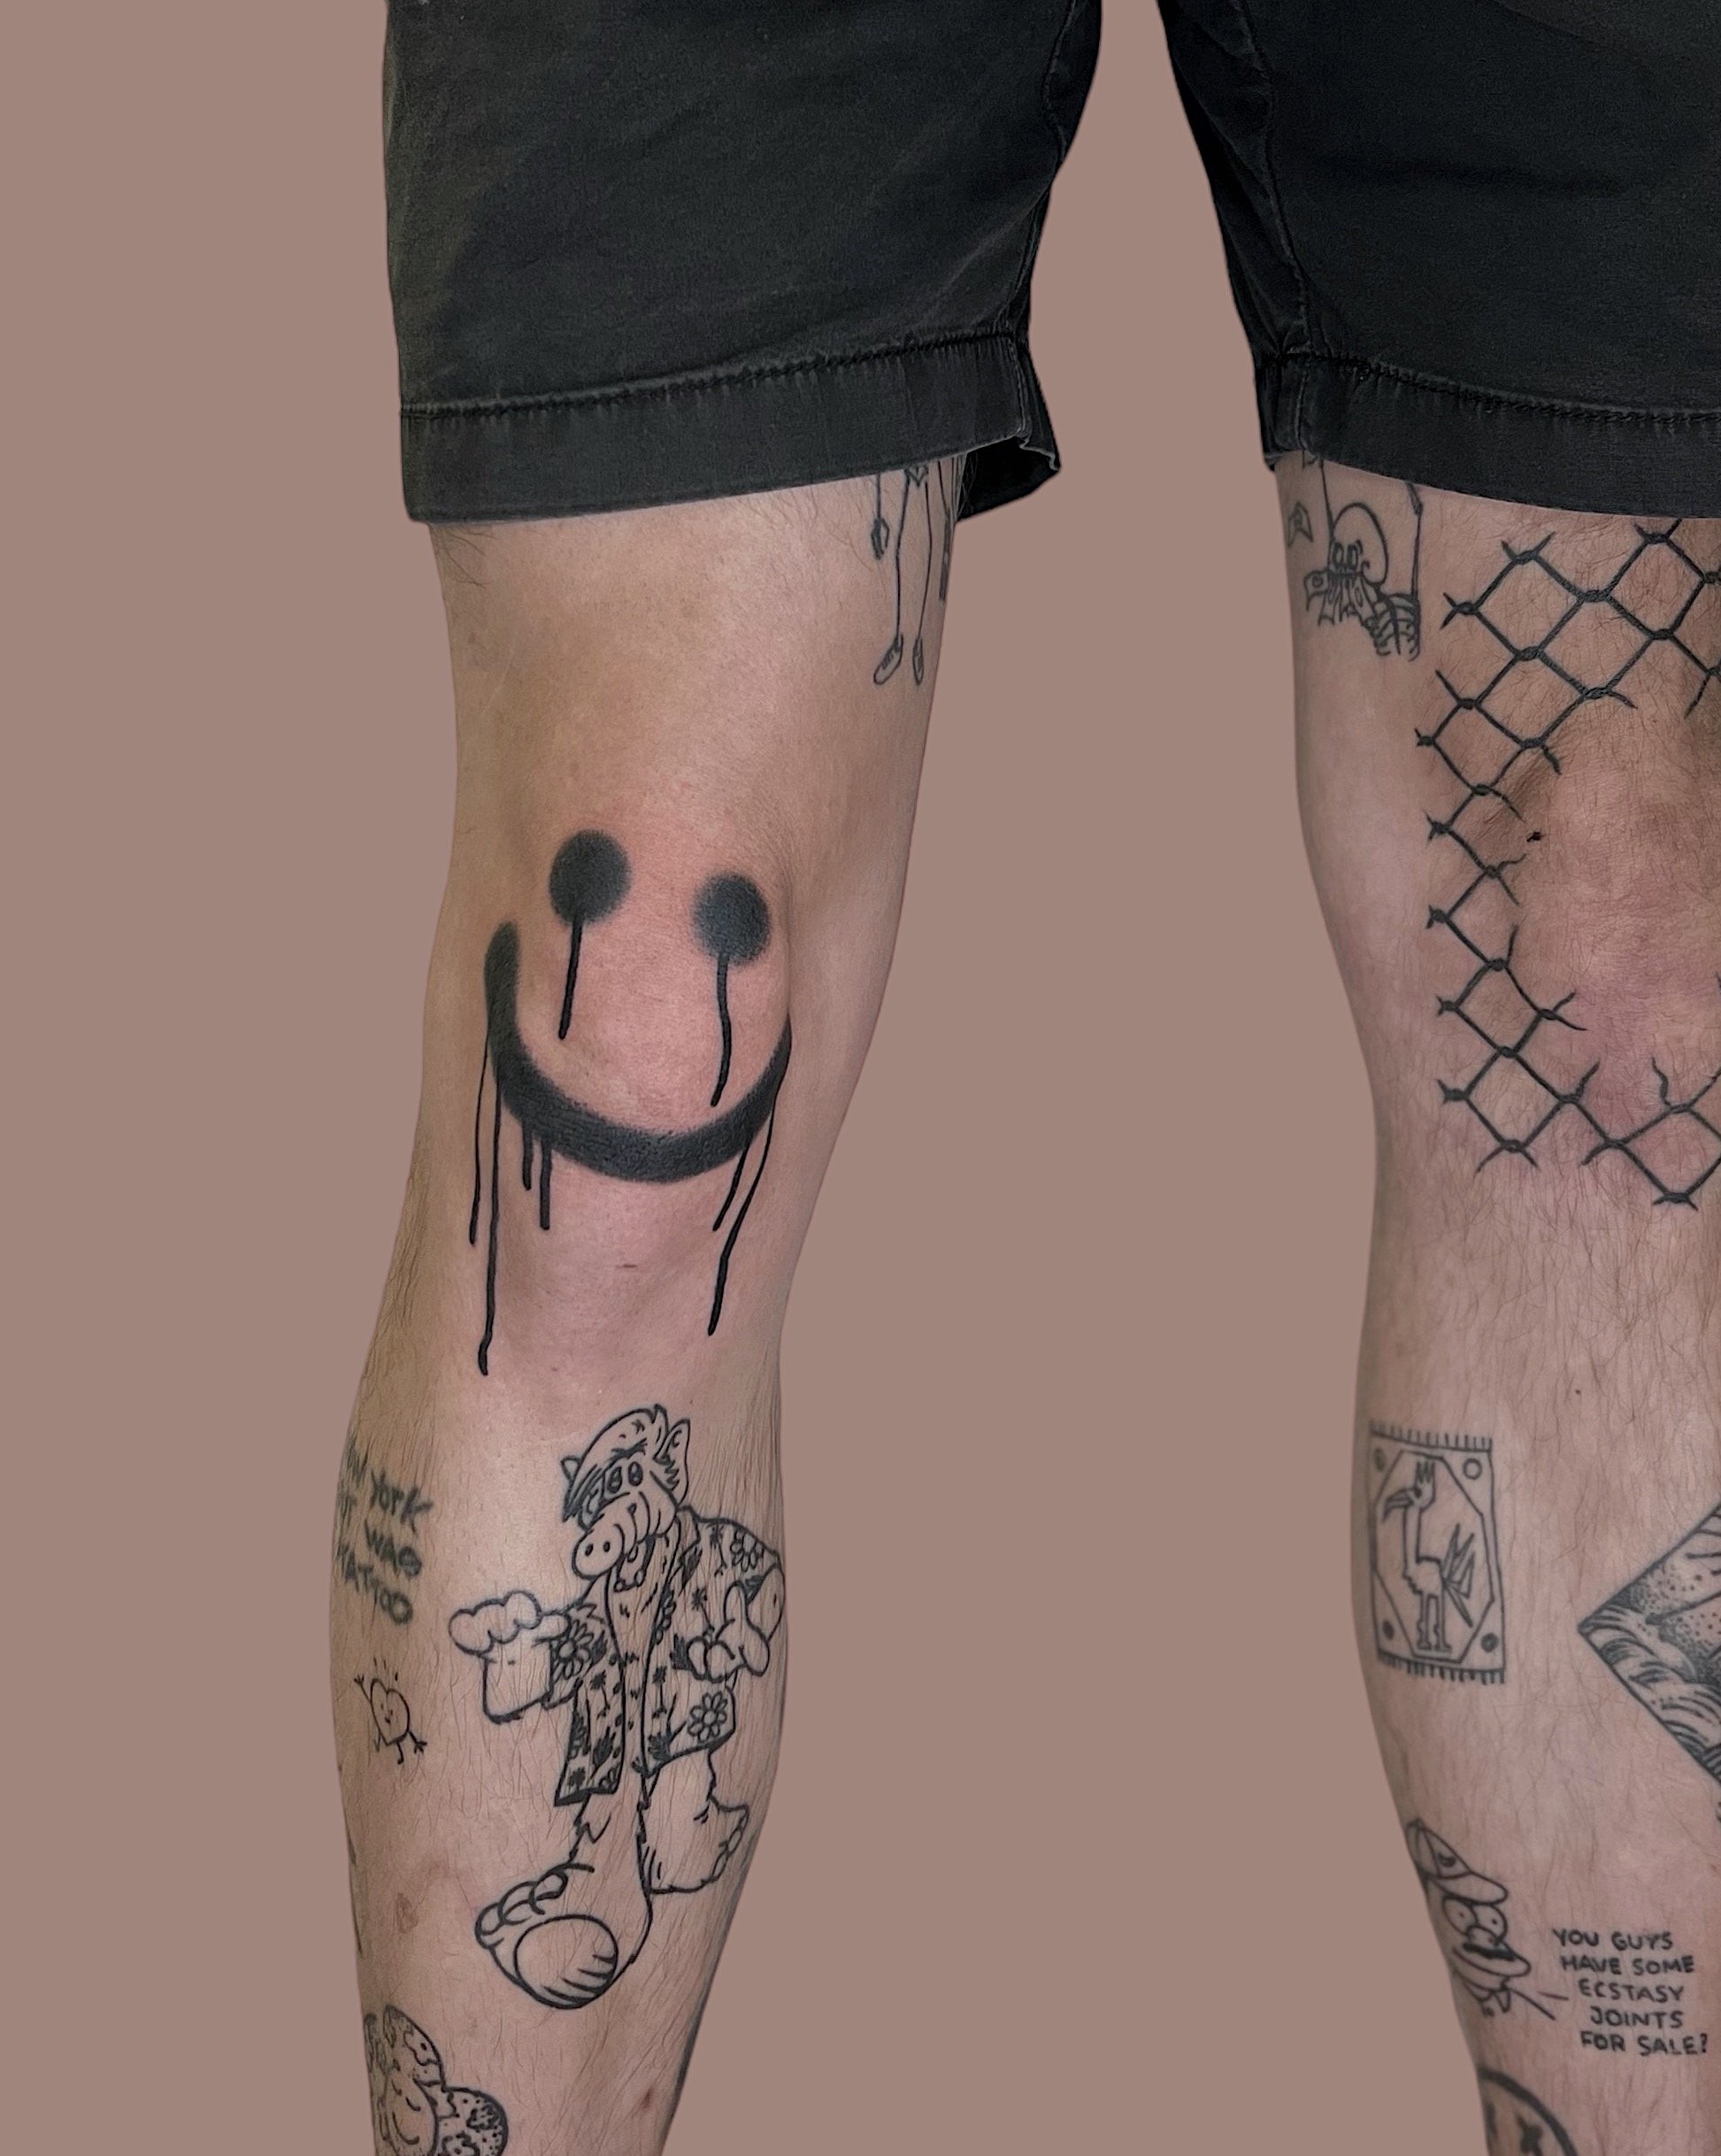 Graphiti like smiley tattooed on knee by Vitya lyuty.JPG